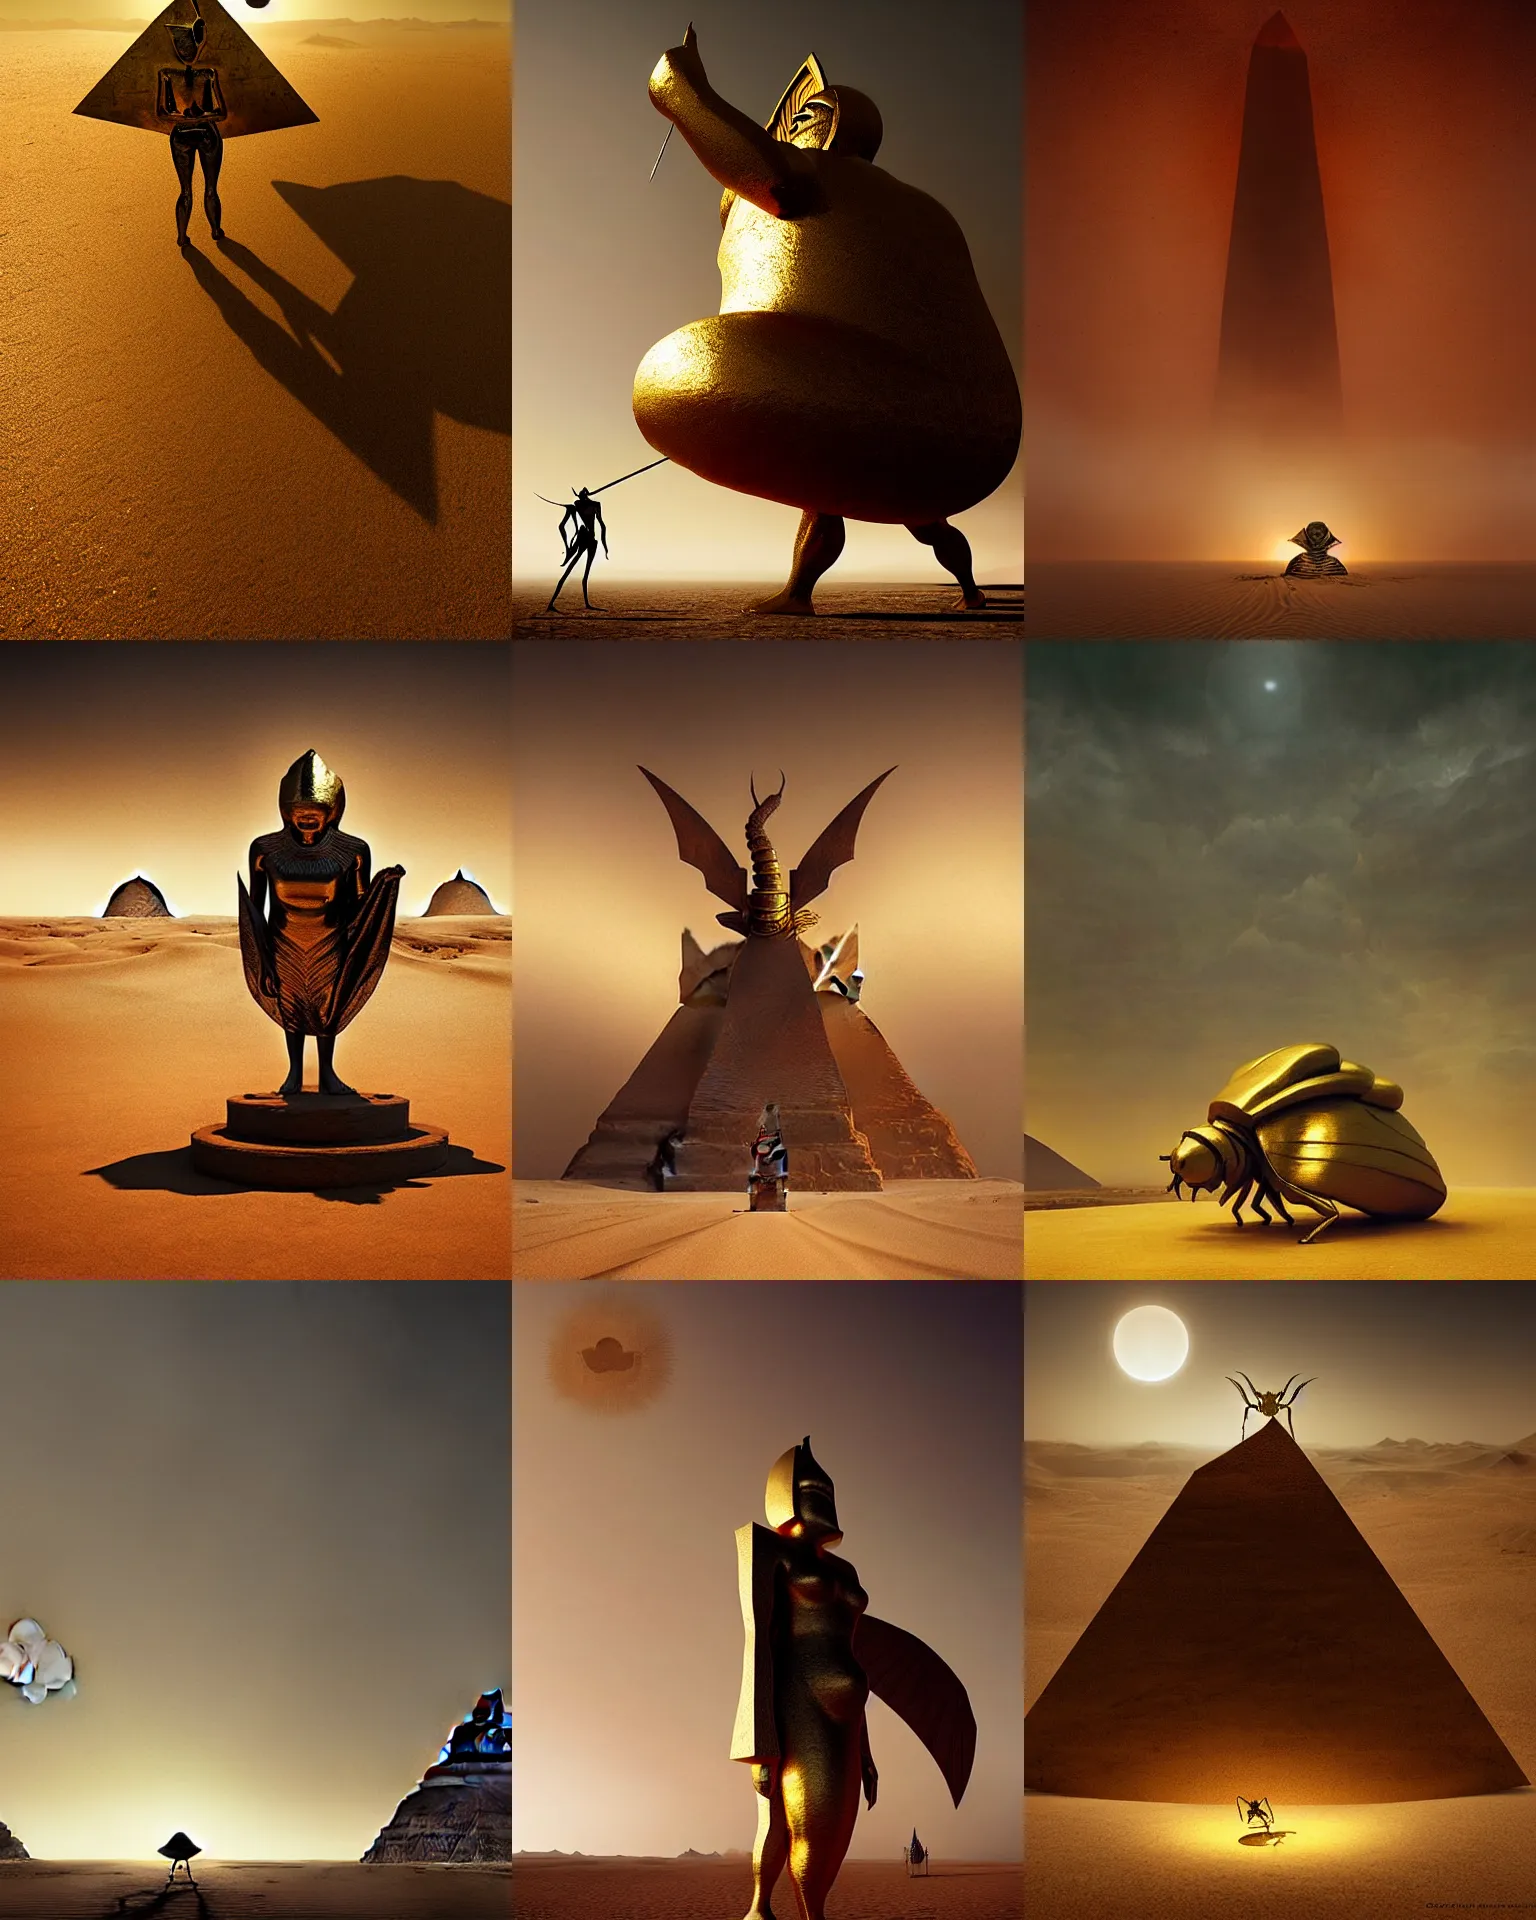 Prompt: giant gold fat bug statue, darkness, egypt piramids on horizon, fantasy dnd art, evil fluid, desert, by greg rutkowski